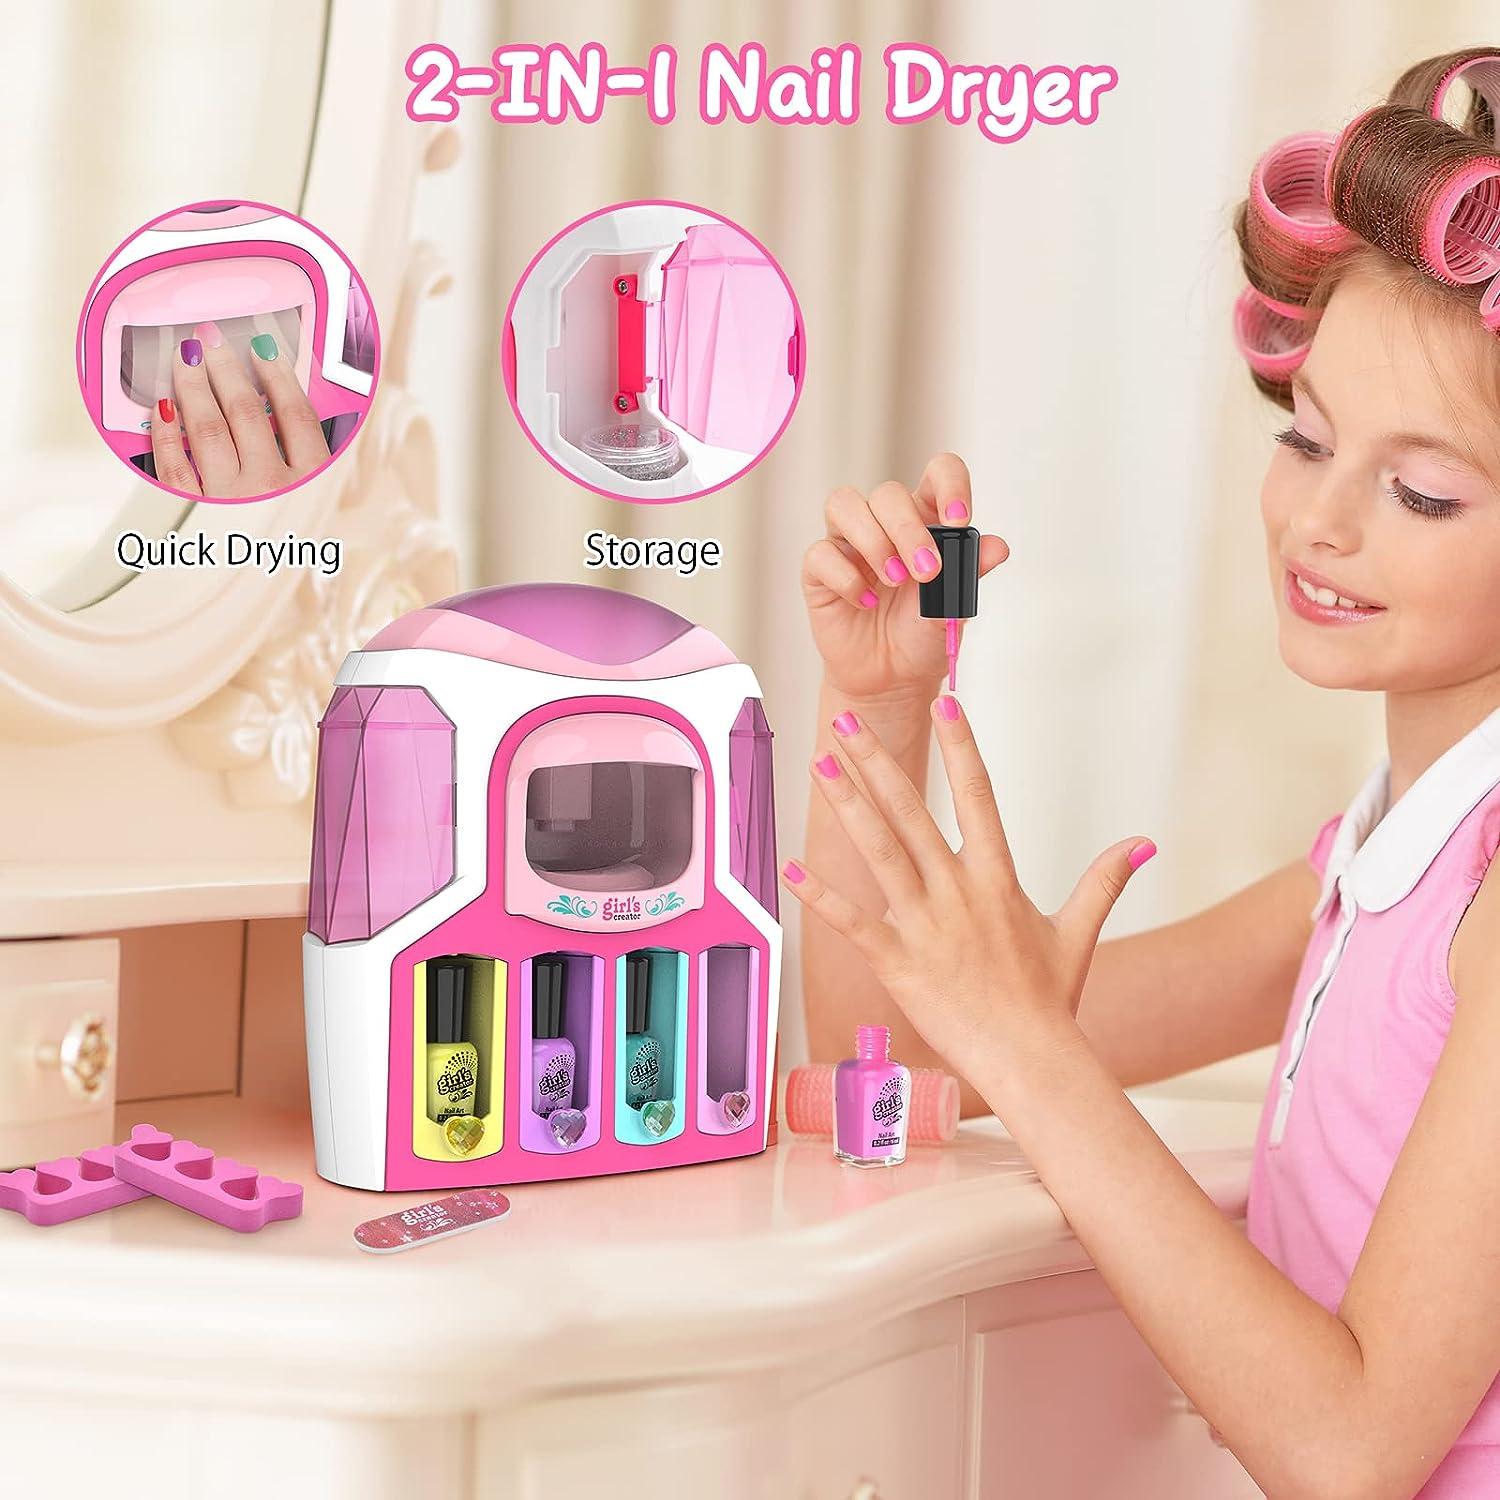 Nail Art Kit For Girls Kids Nail Polish Play Set With Nail Dryer Kids Age  6-12